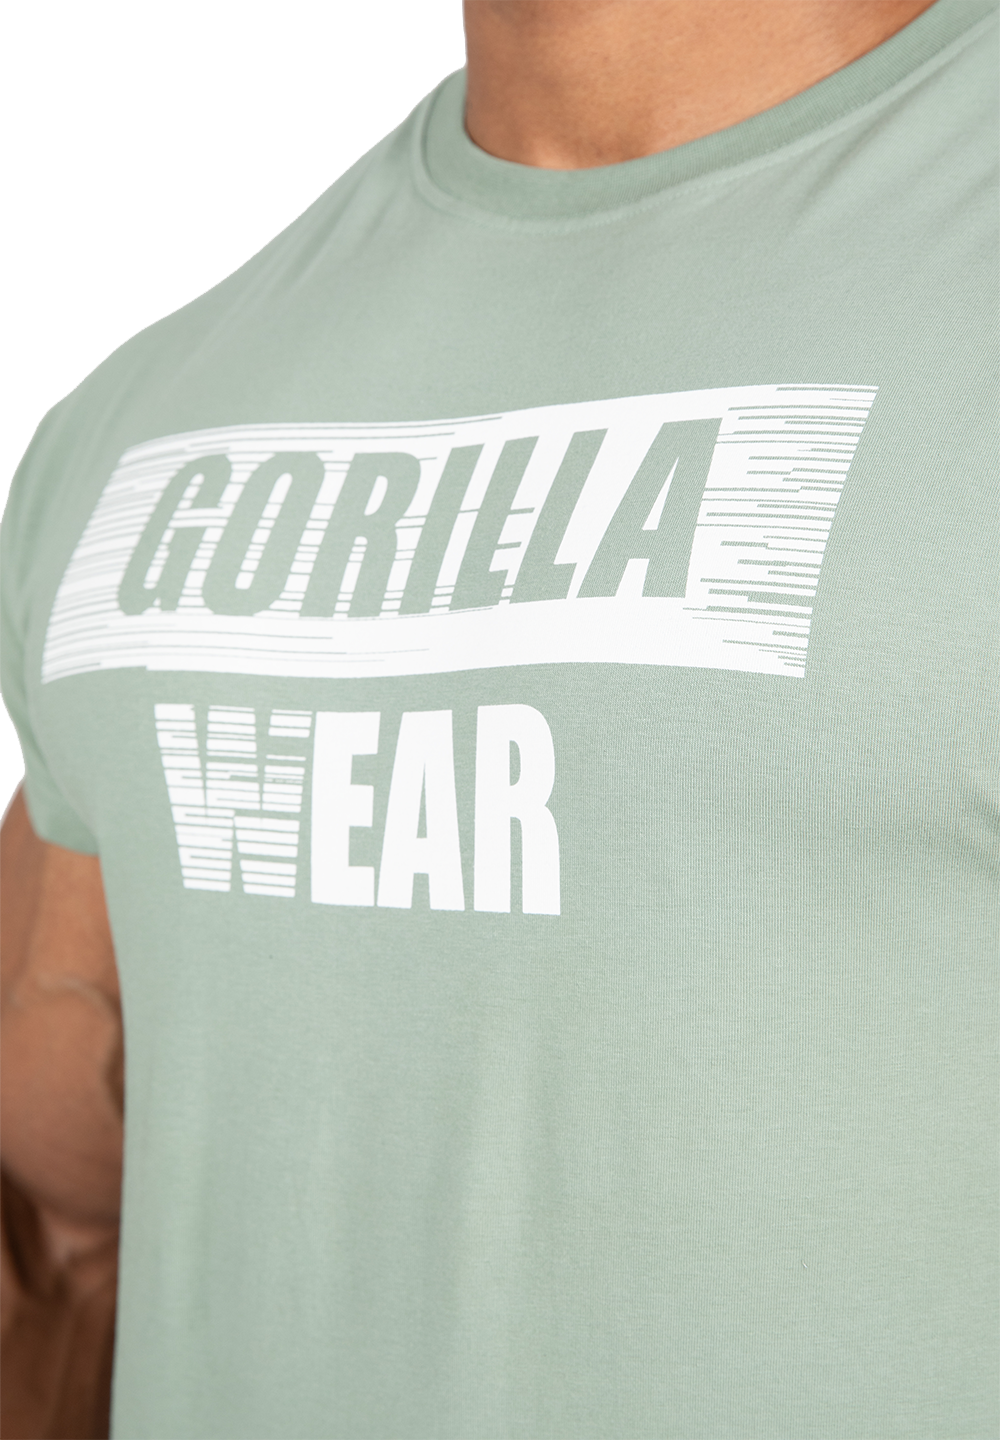 Футболка Murray T-Shirt - Green от Gorilla Wear